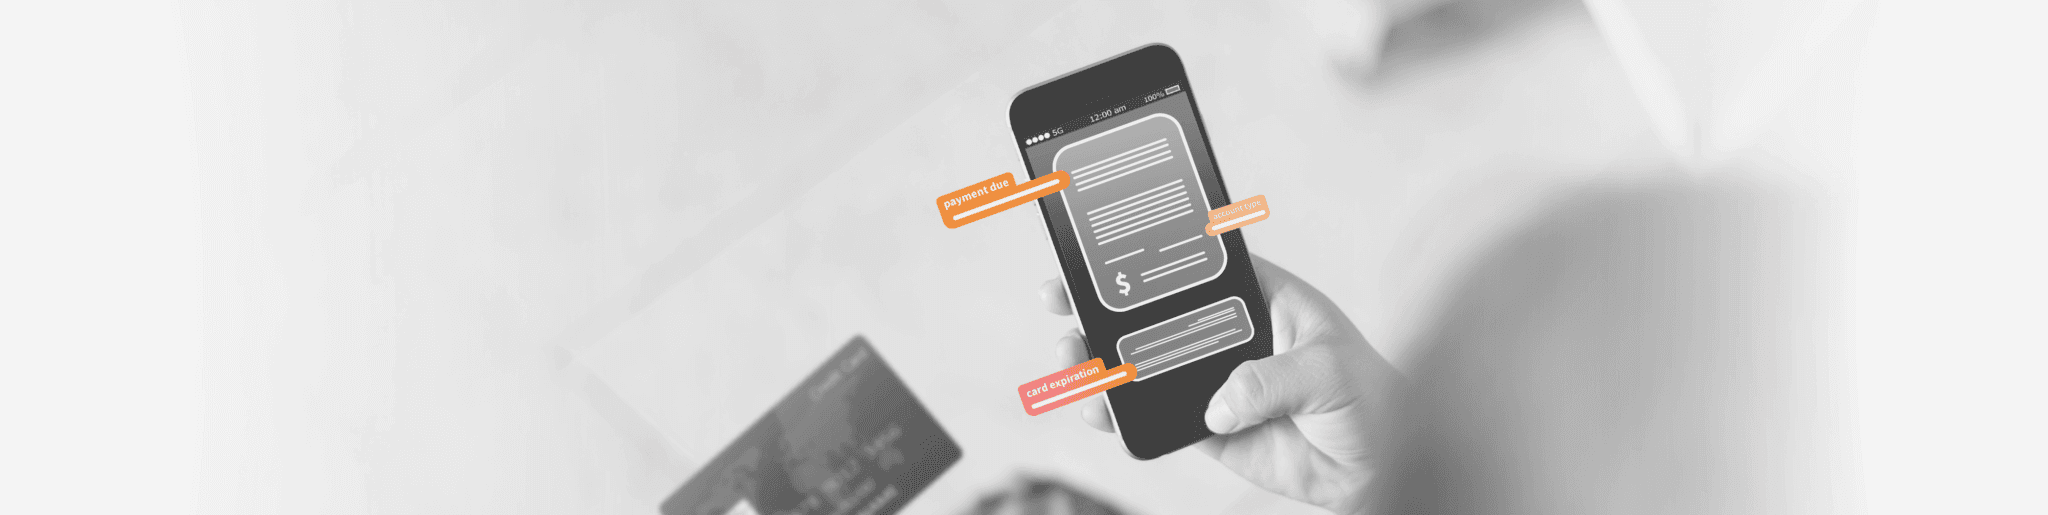 Enhancing Customer Service: Bilingual Chatbot Development for Payment Scenarios